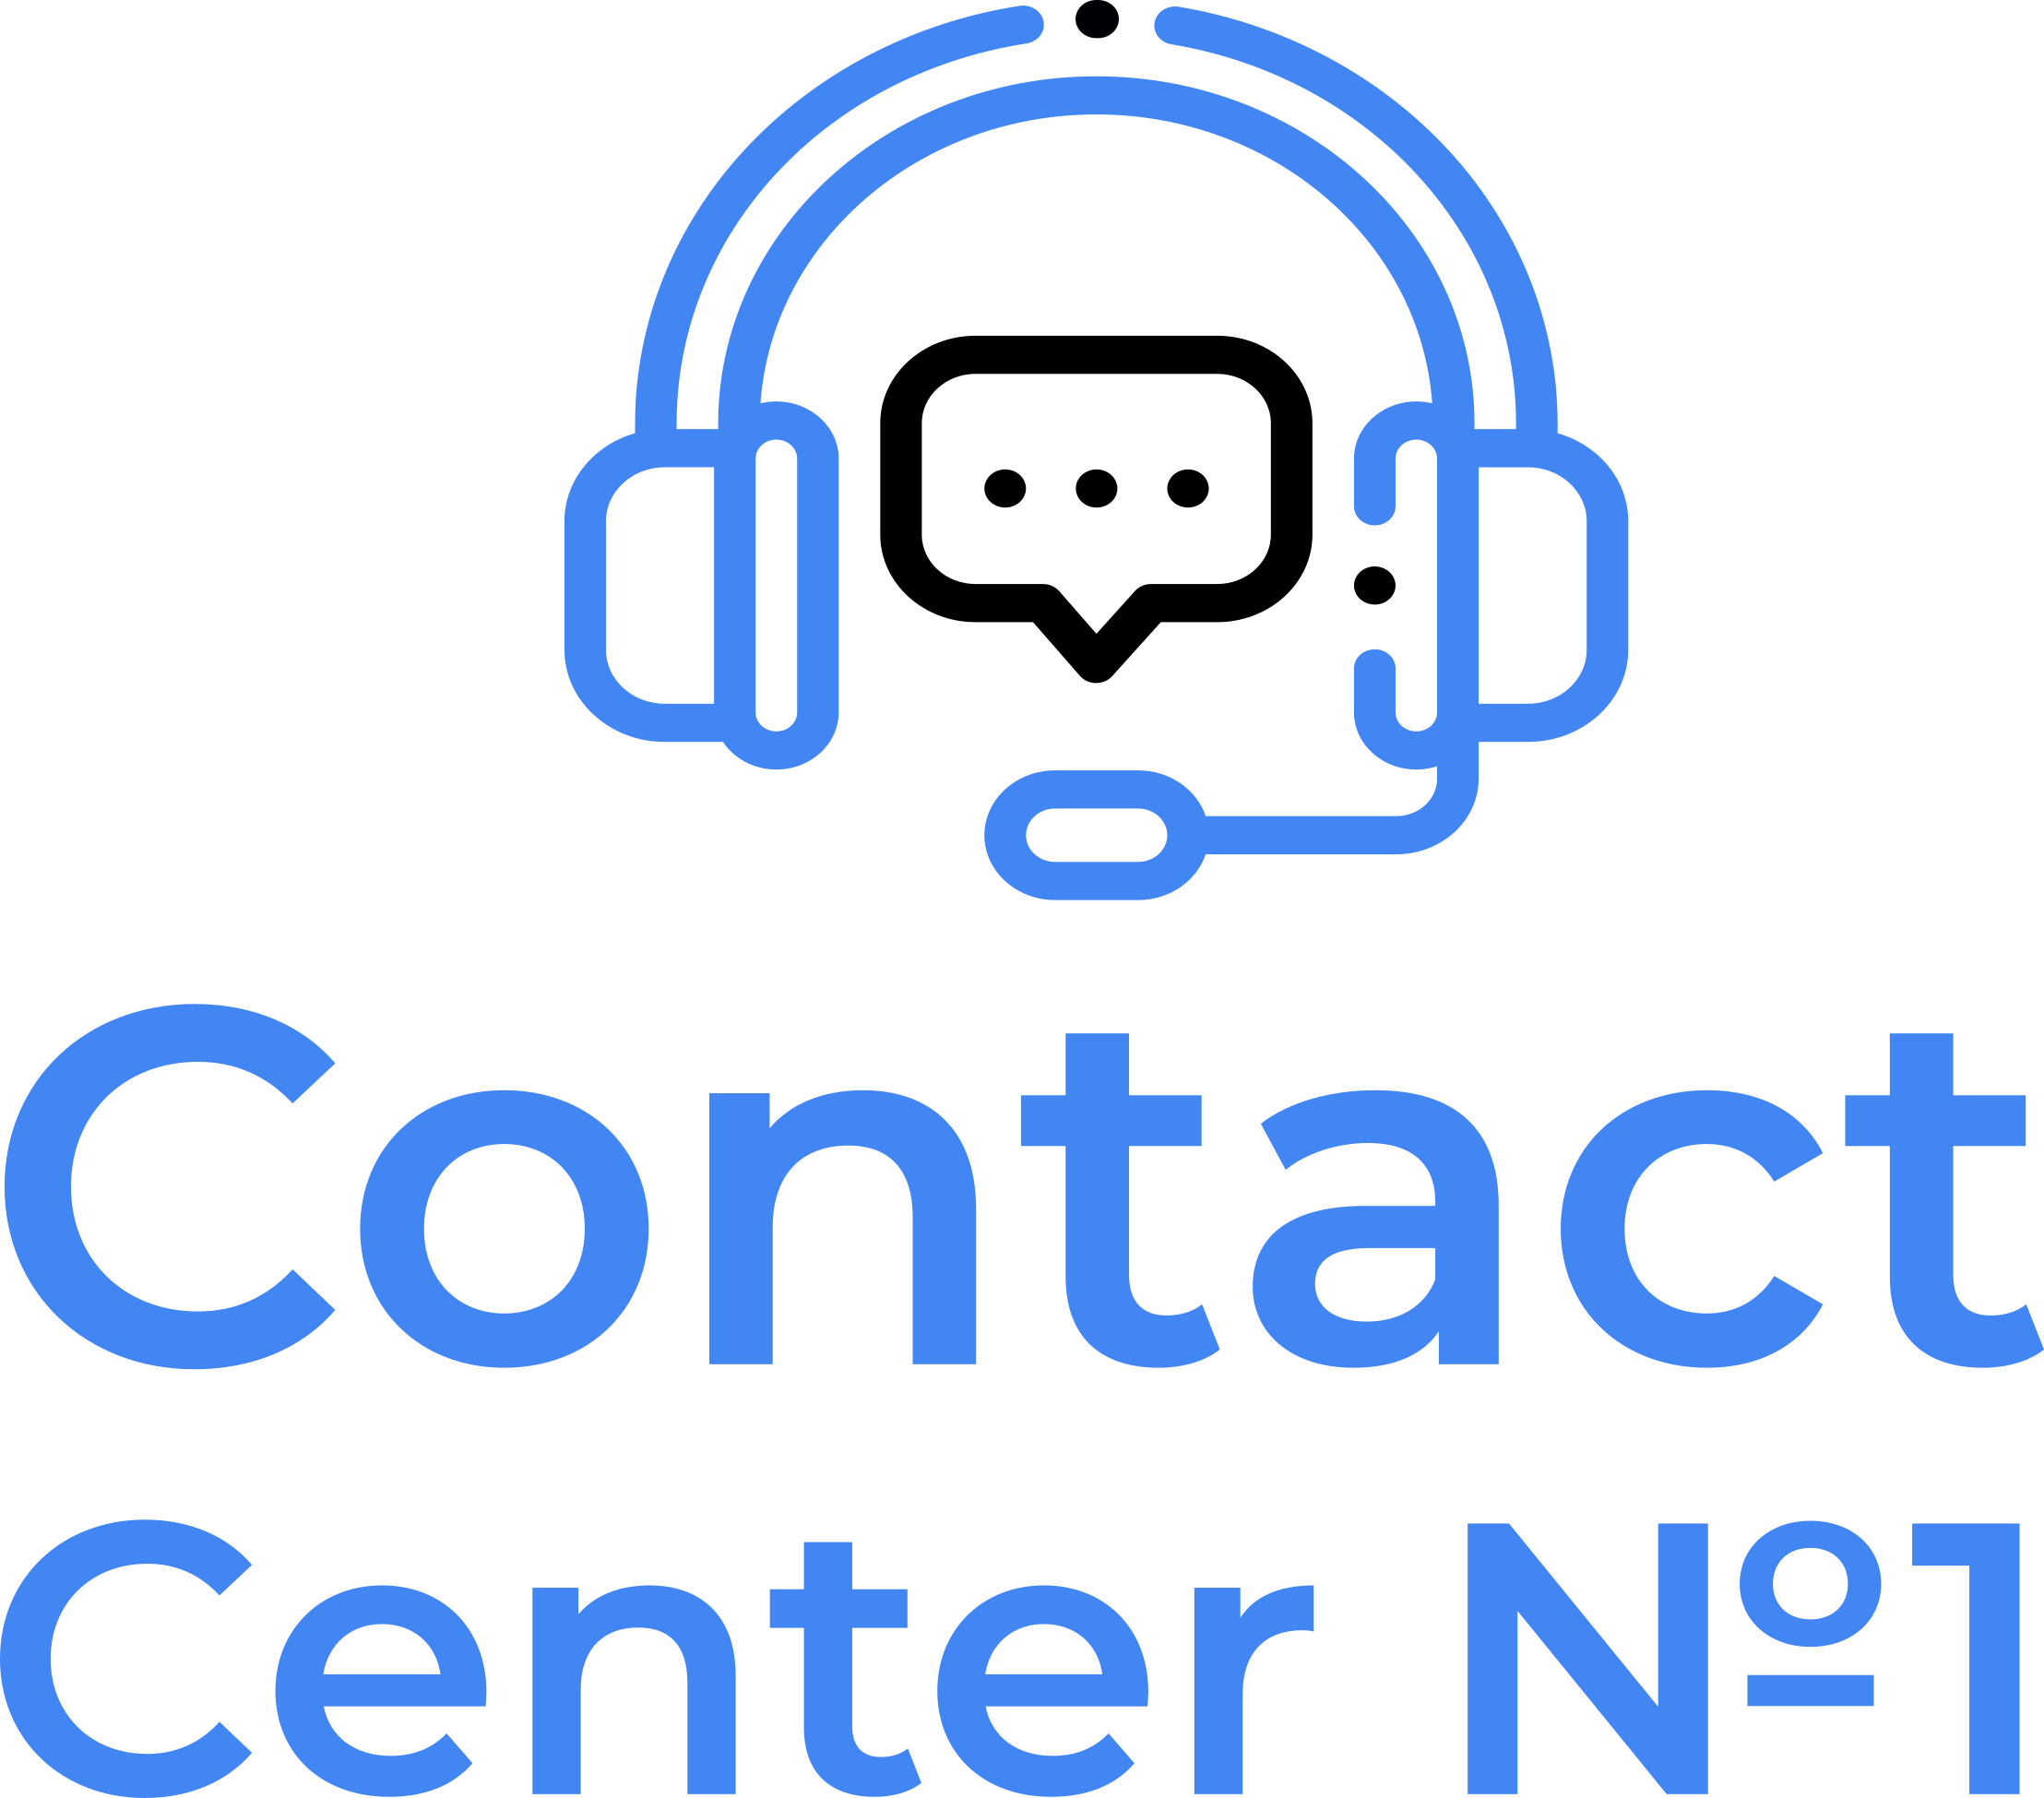 Центр первое слово. Контакт центр 1. Логотип контактного центра. Contact Center №1. HR contact Center №1.